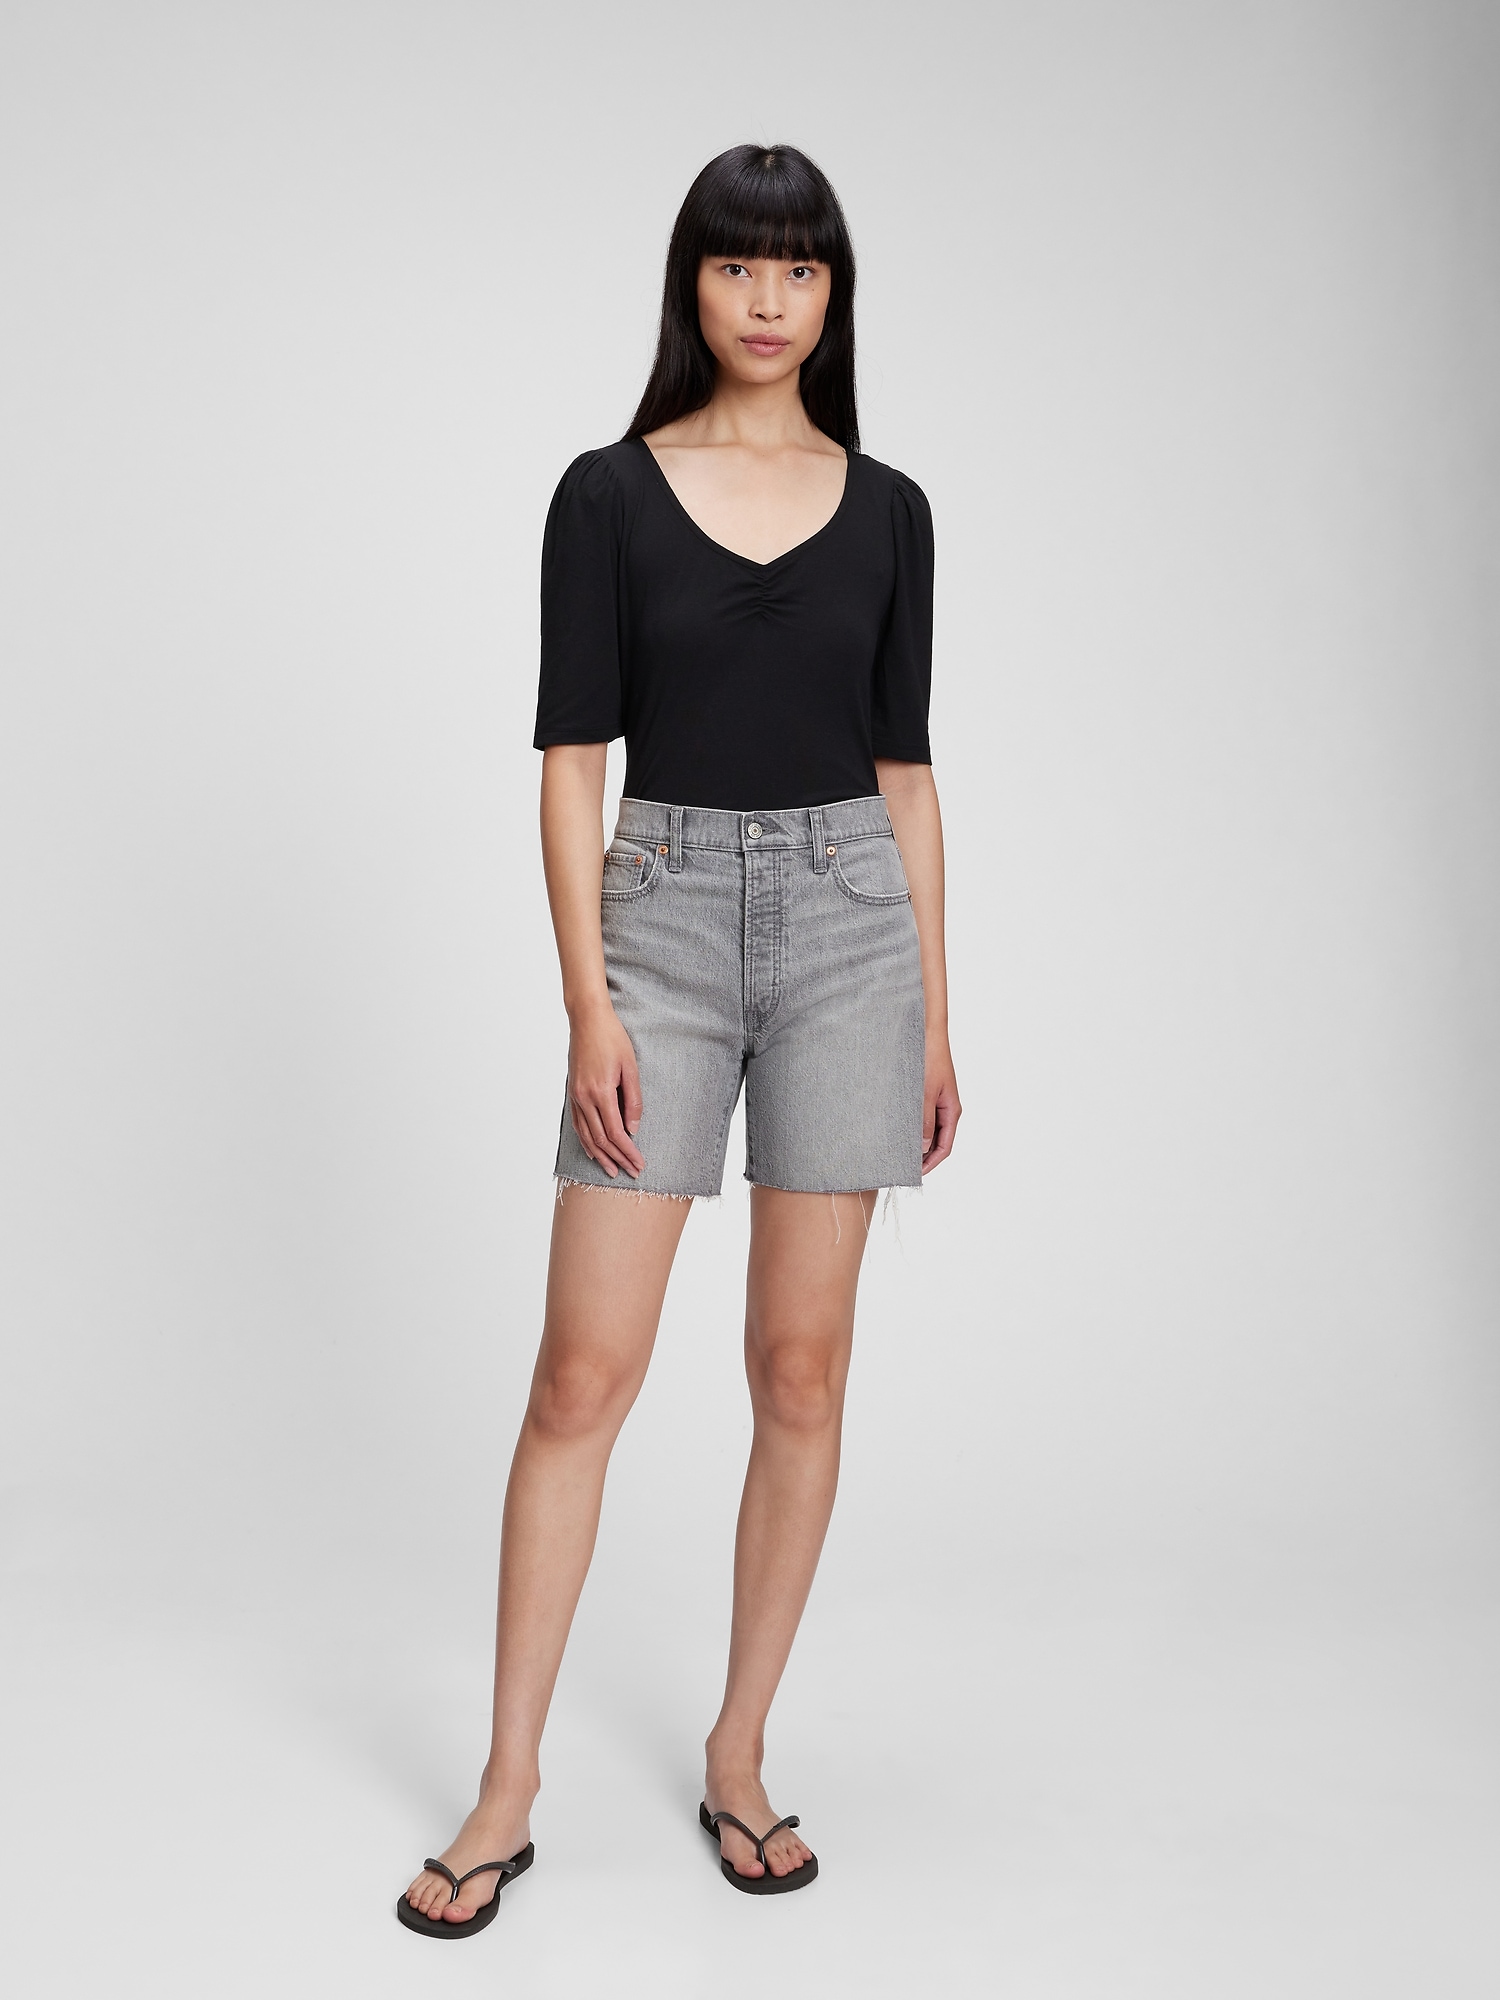 Kalon T-Shirt Womens Size M Grey Long Tail Knit Comfort Minimalist Boho  Stretch